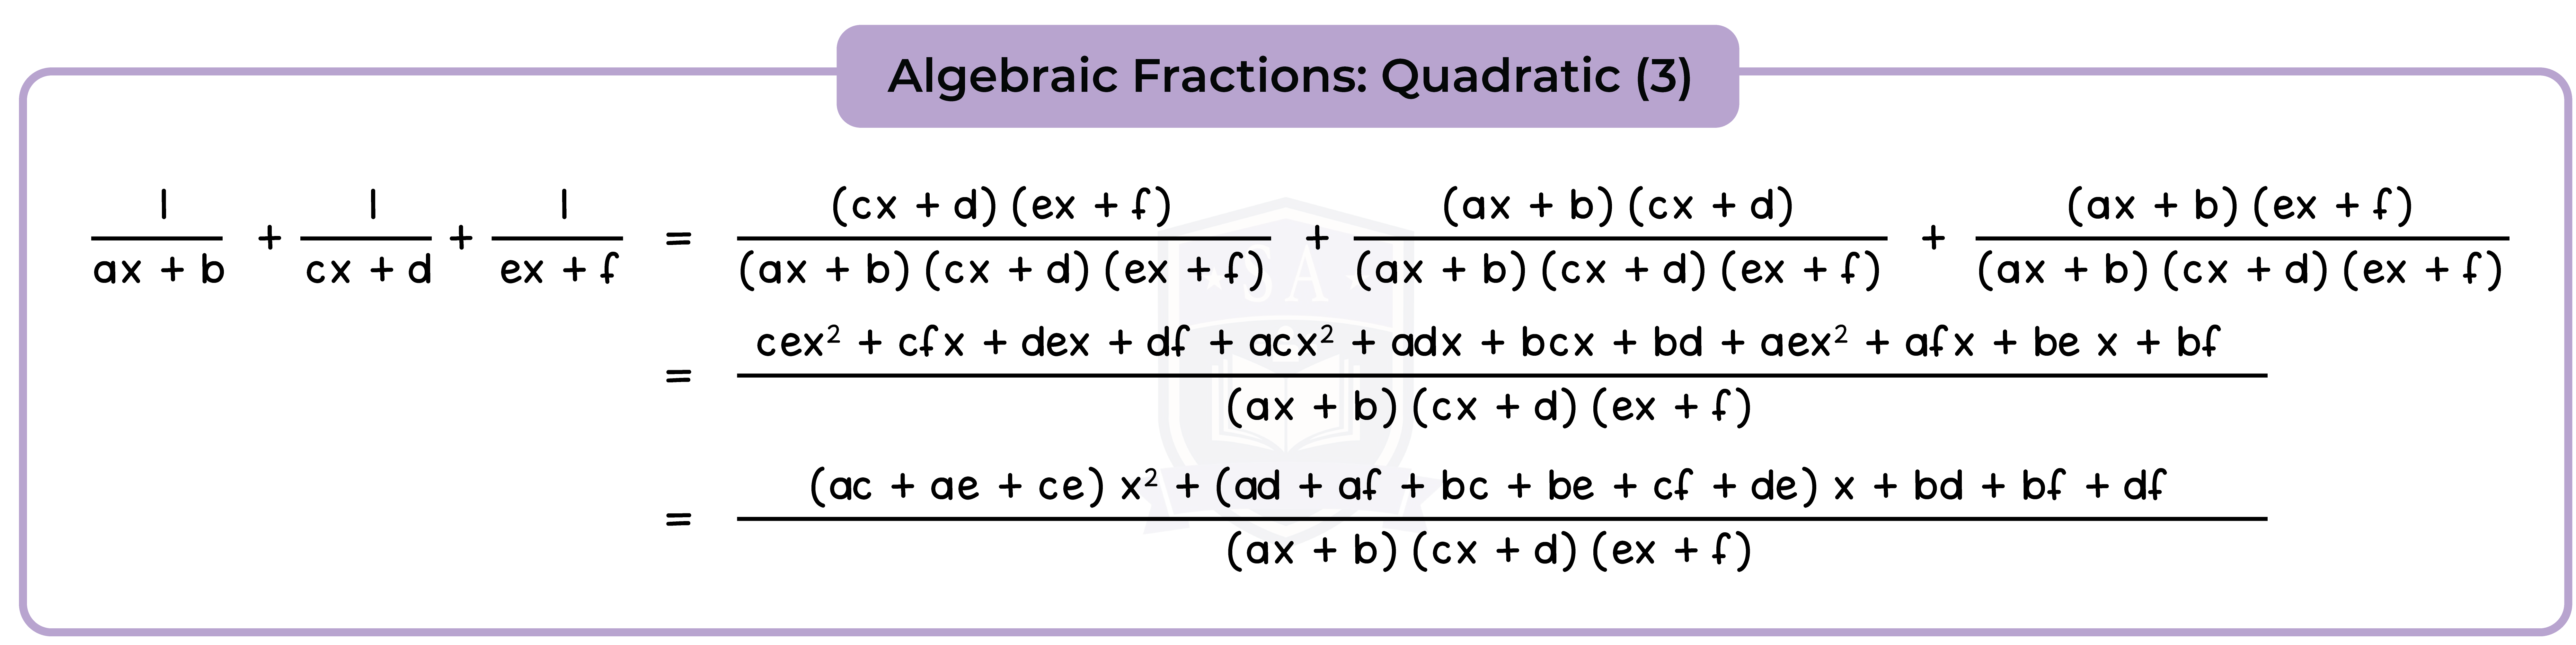 edexcel_igcse_mathematics a_topic 13_algebraic manipulation_008_Algebraic Fractions: Quadratic (3)